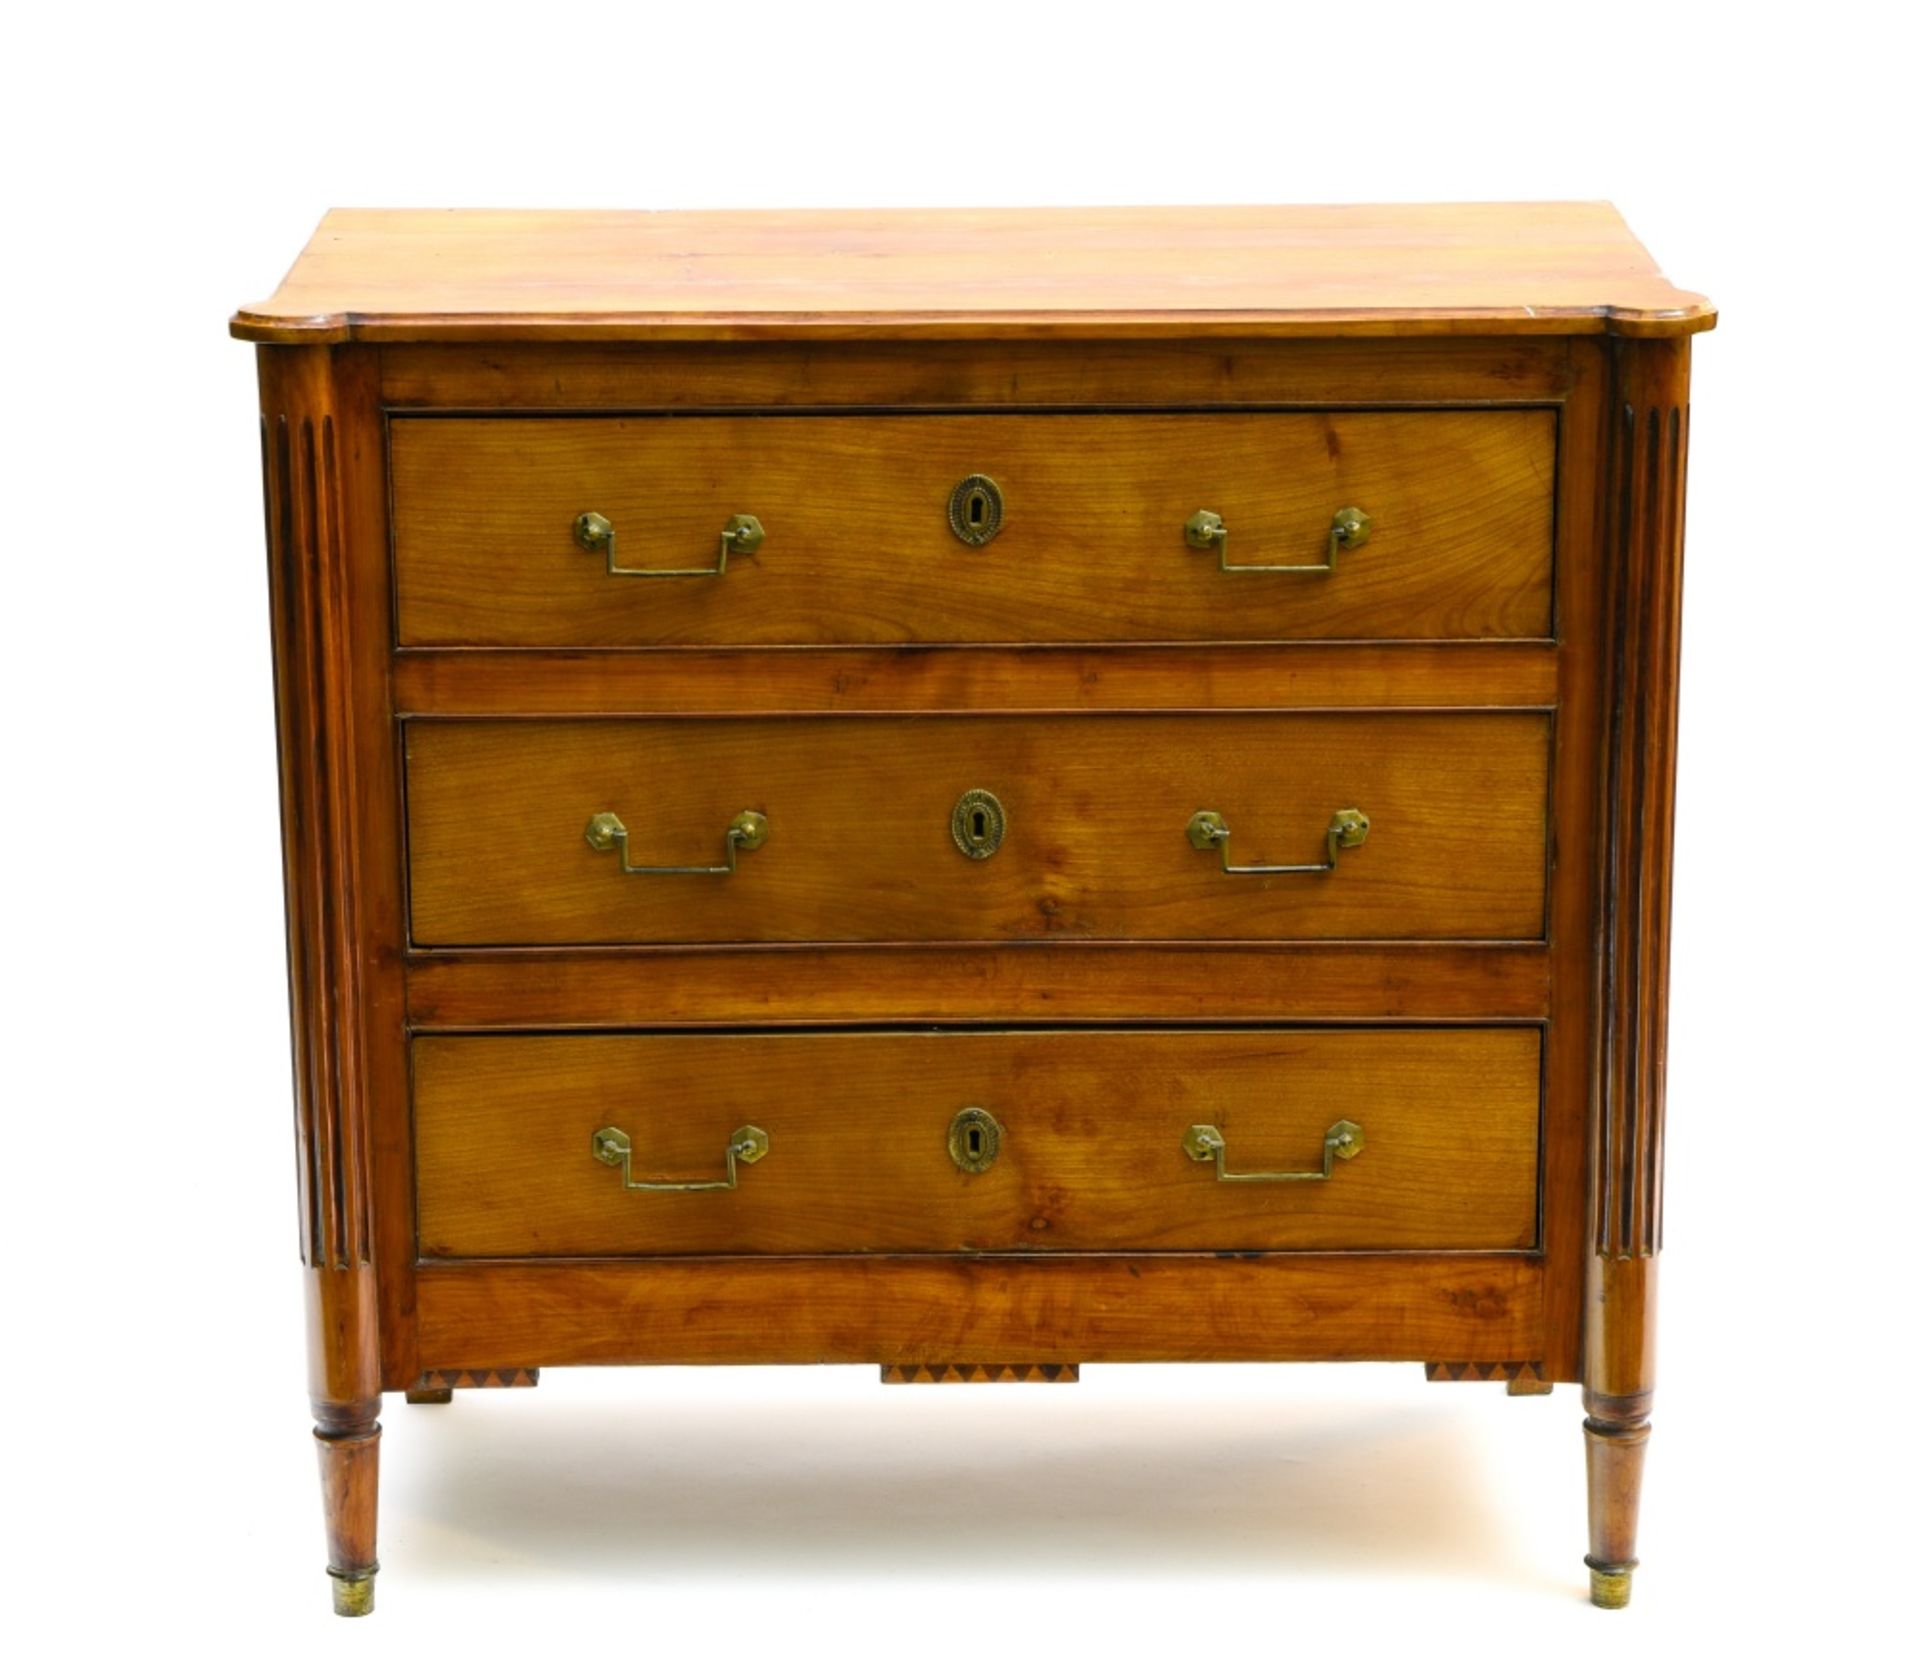 19th century work Commode, Lemonwood and lemonwood veneer, with three drawers and fluted legs.